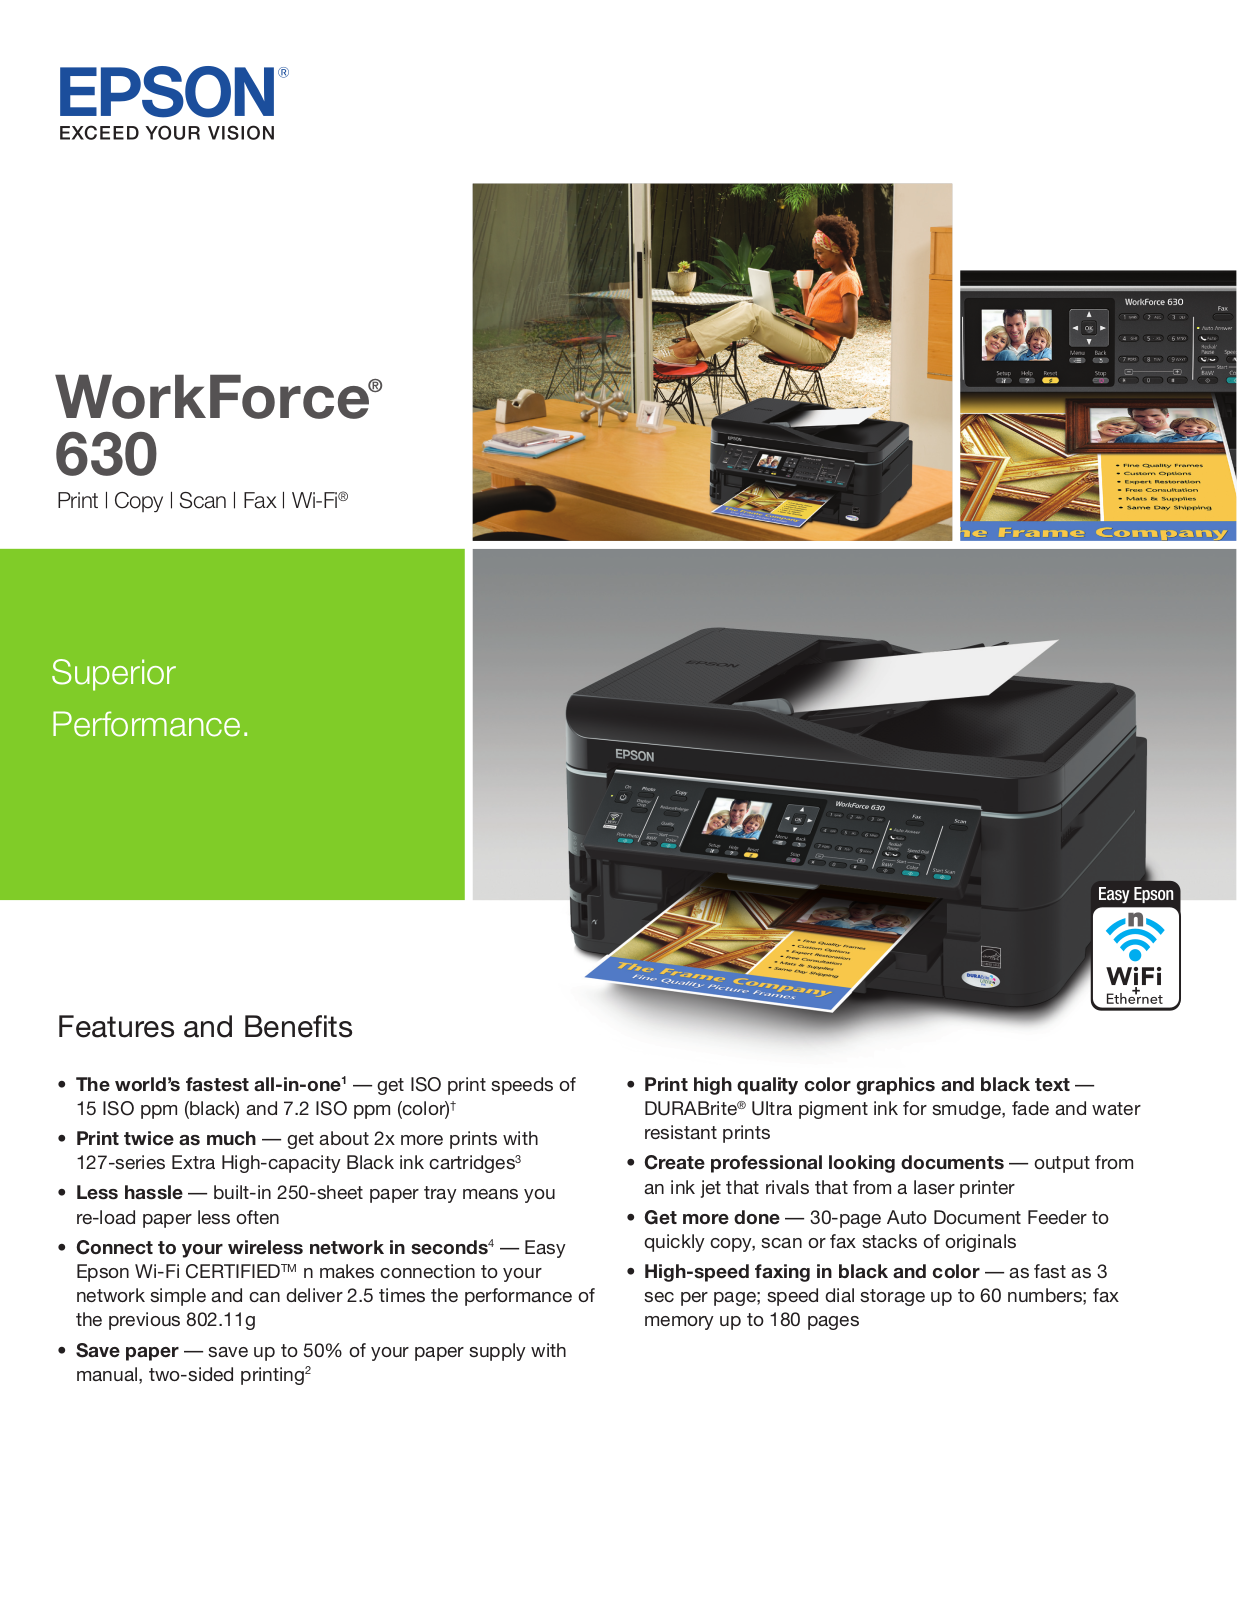 Epson WorkForce 630 Product Brochure